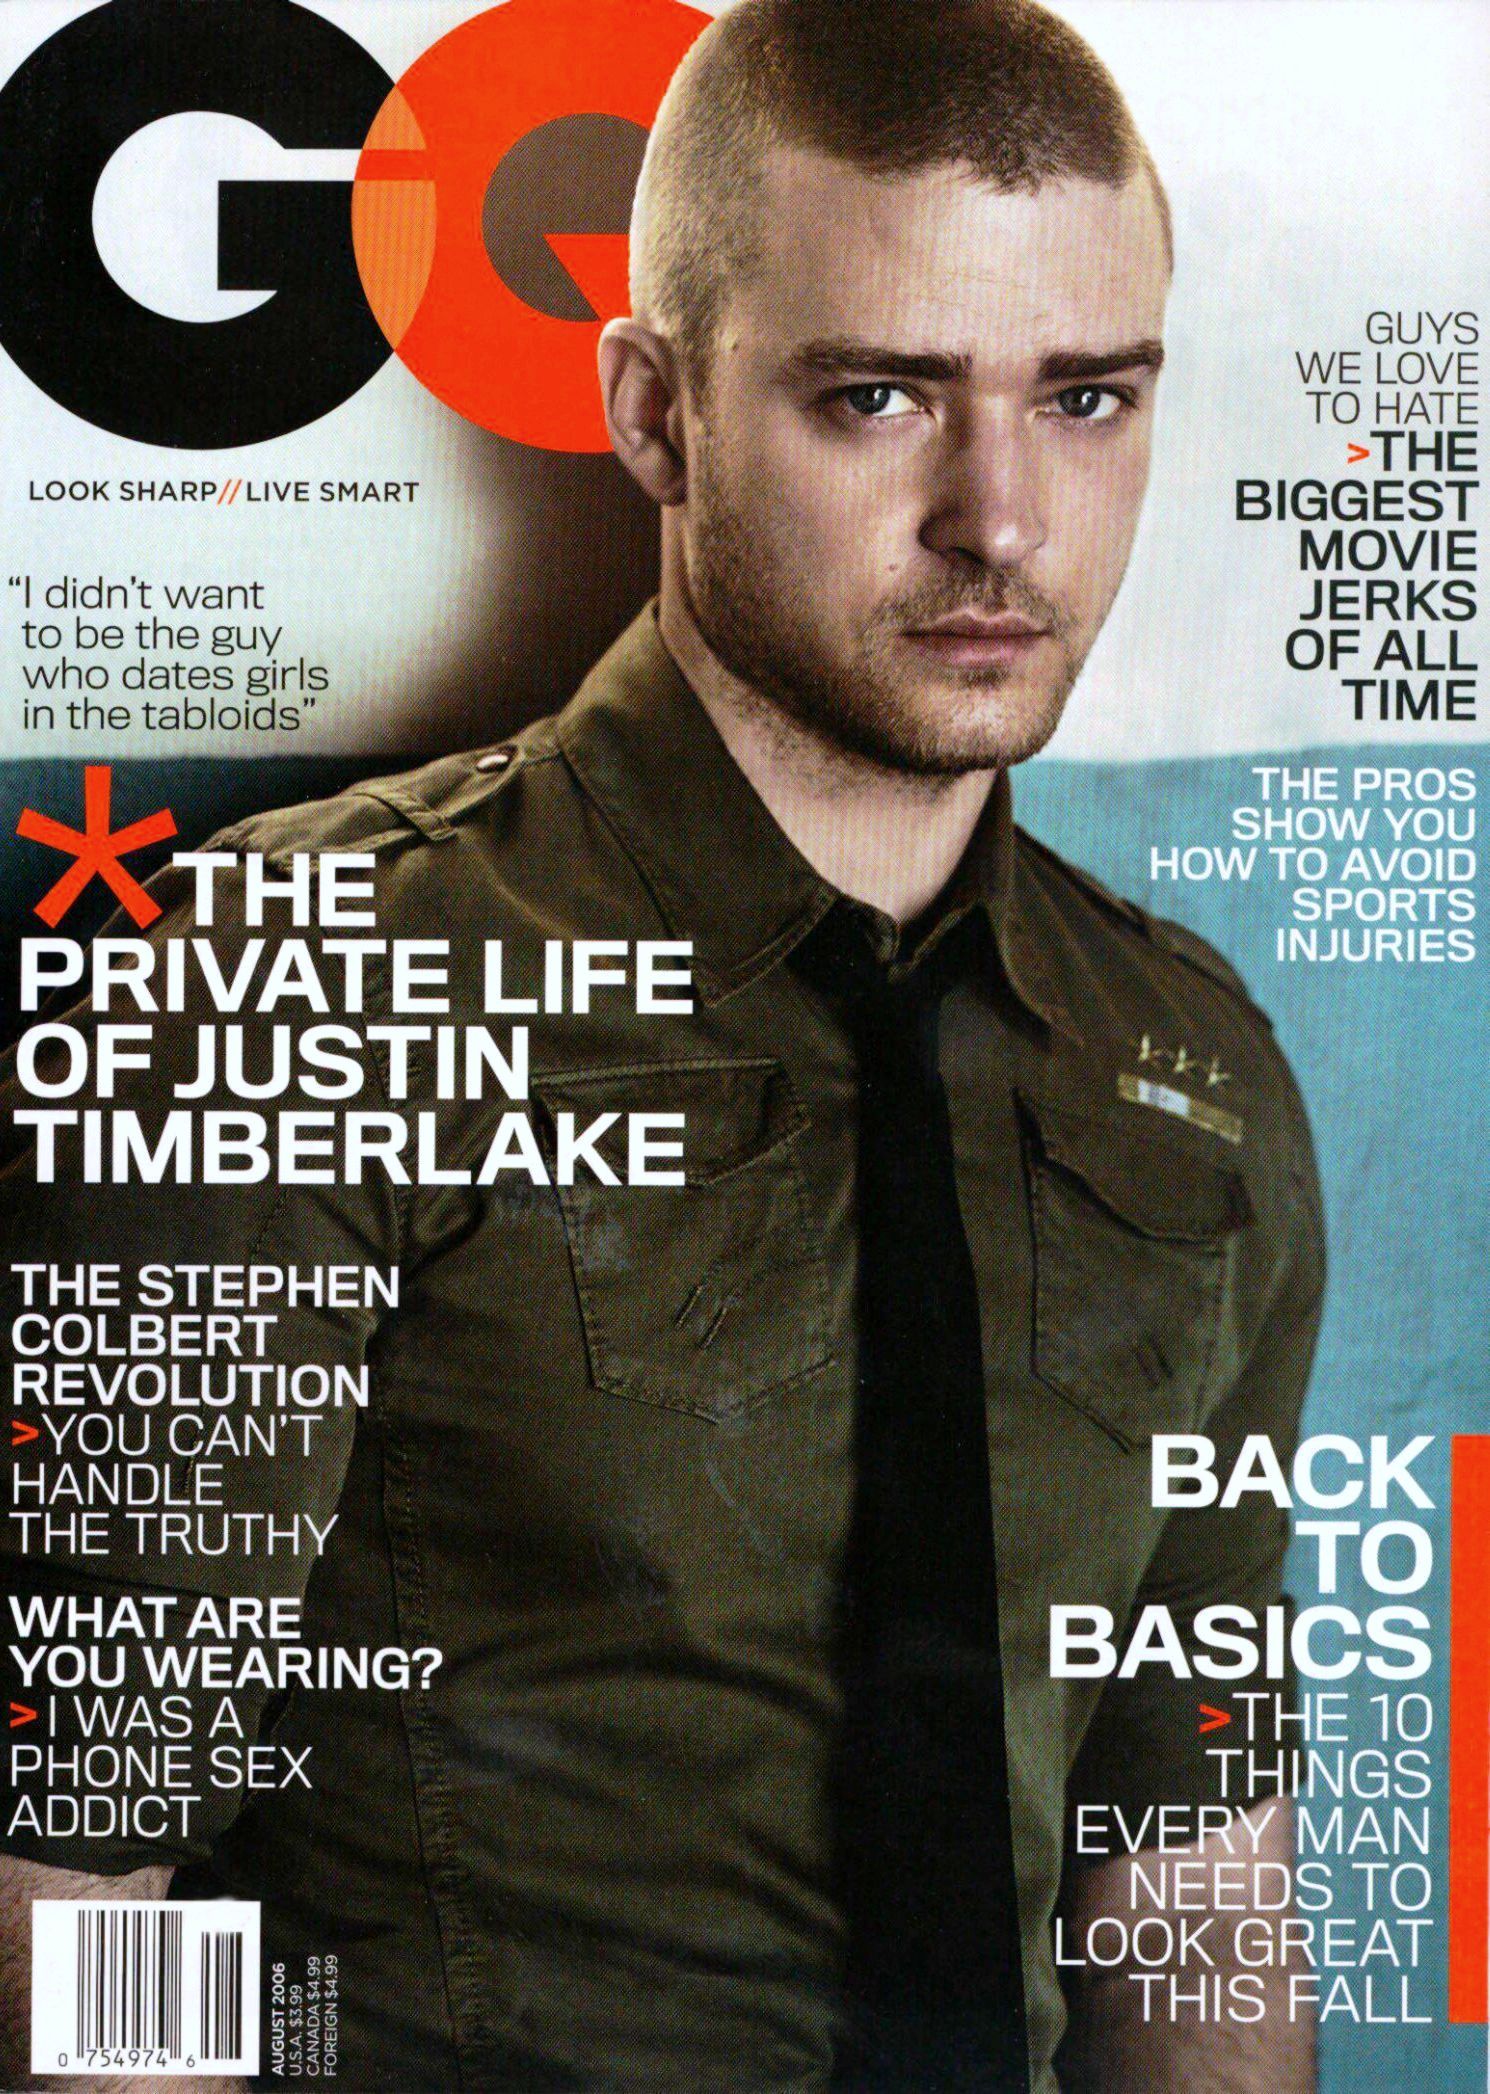 Justin Timberlake photo 48 of 631 pics, wallpaper - photo #62739 ...